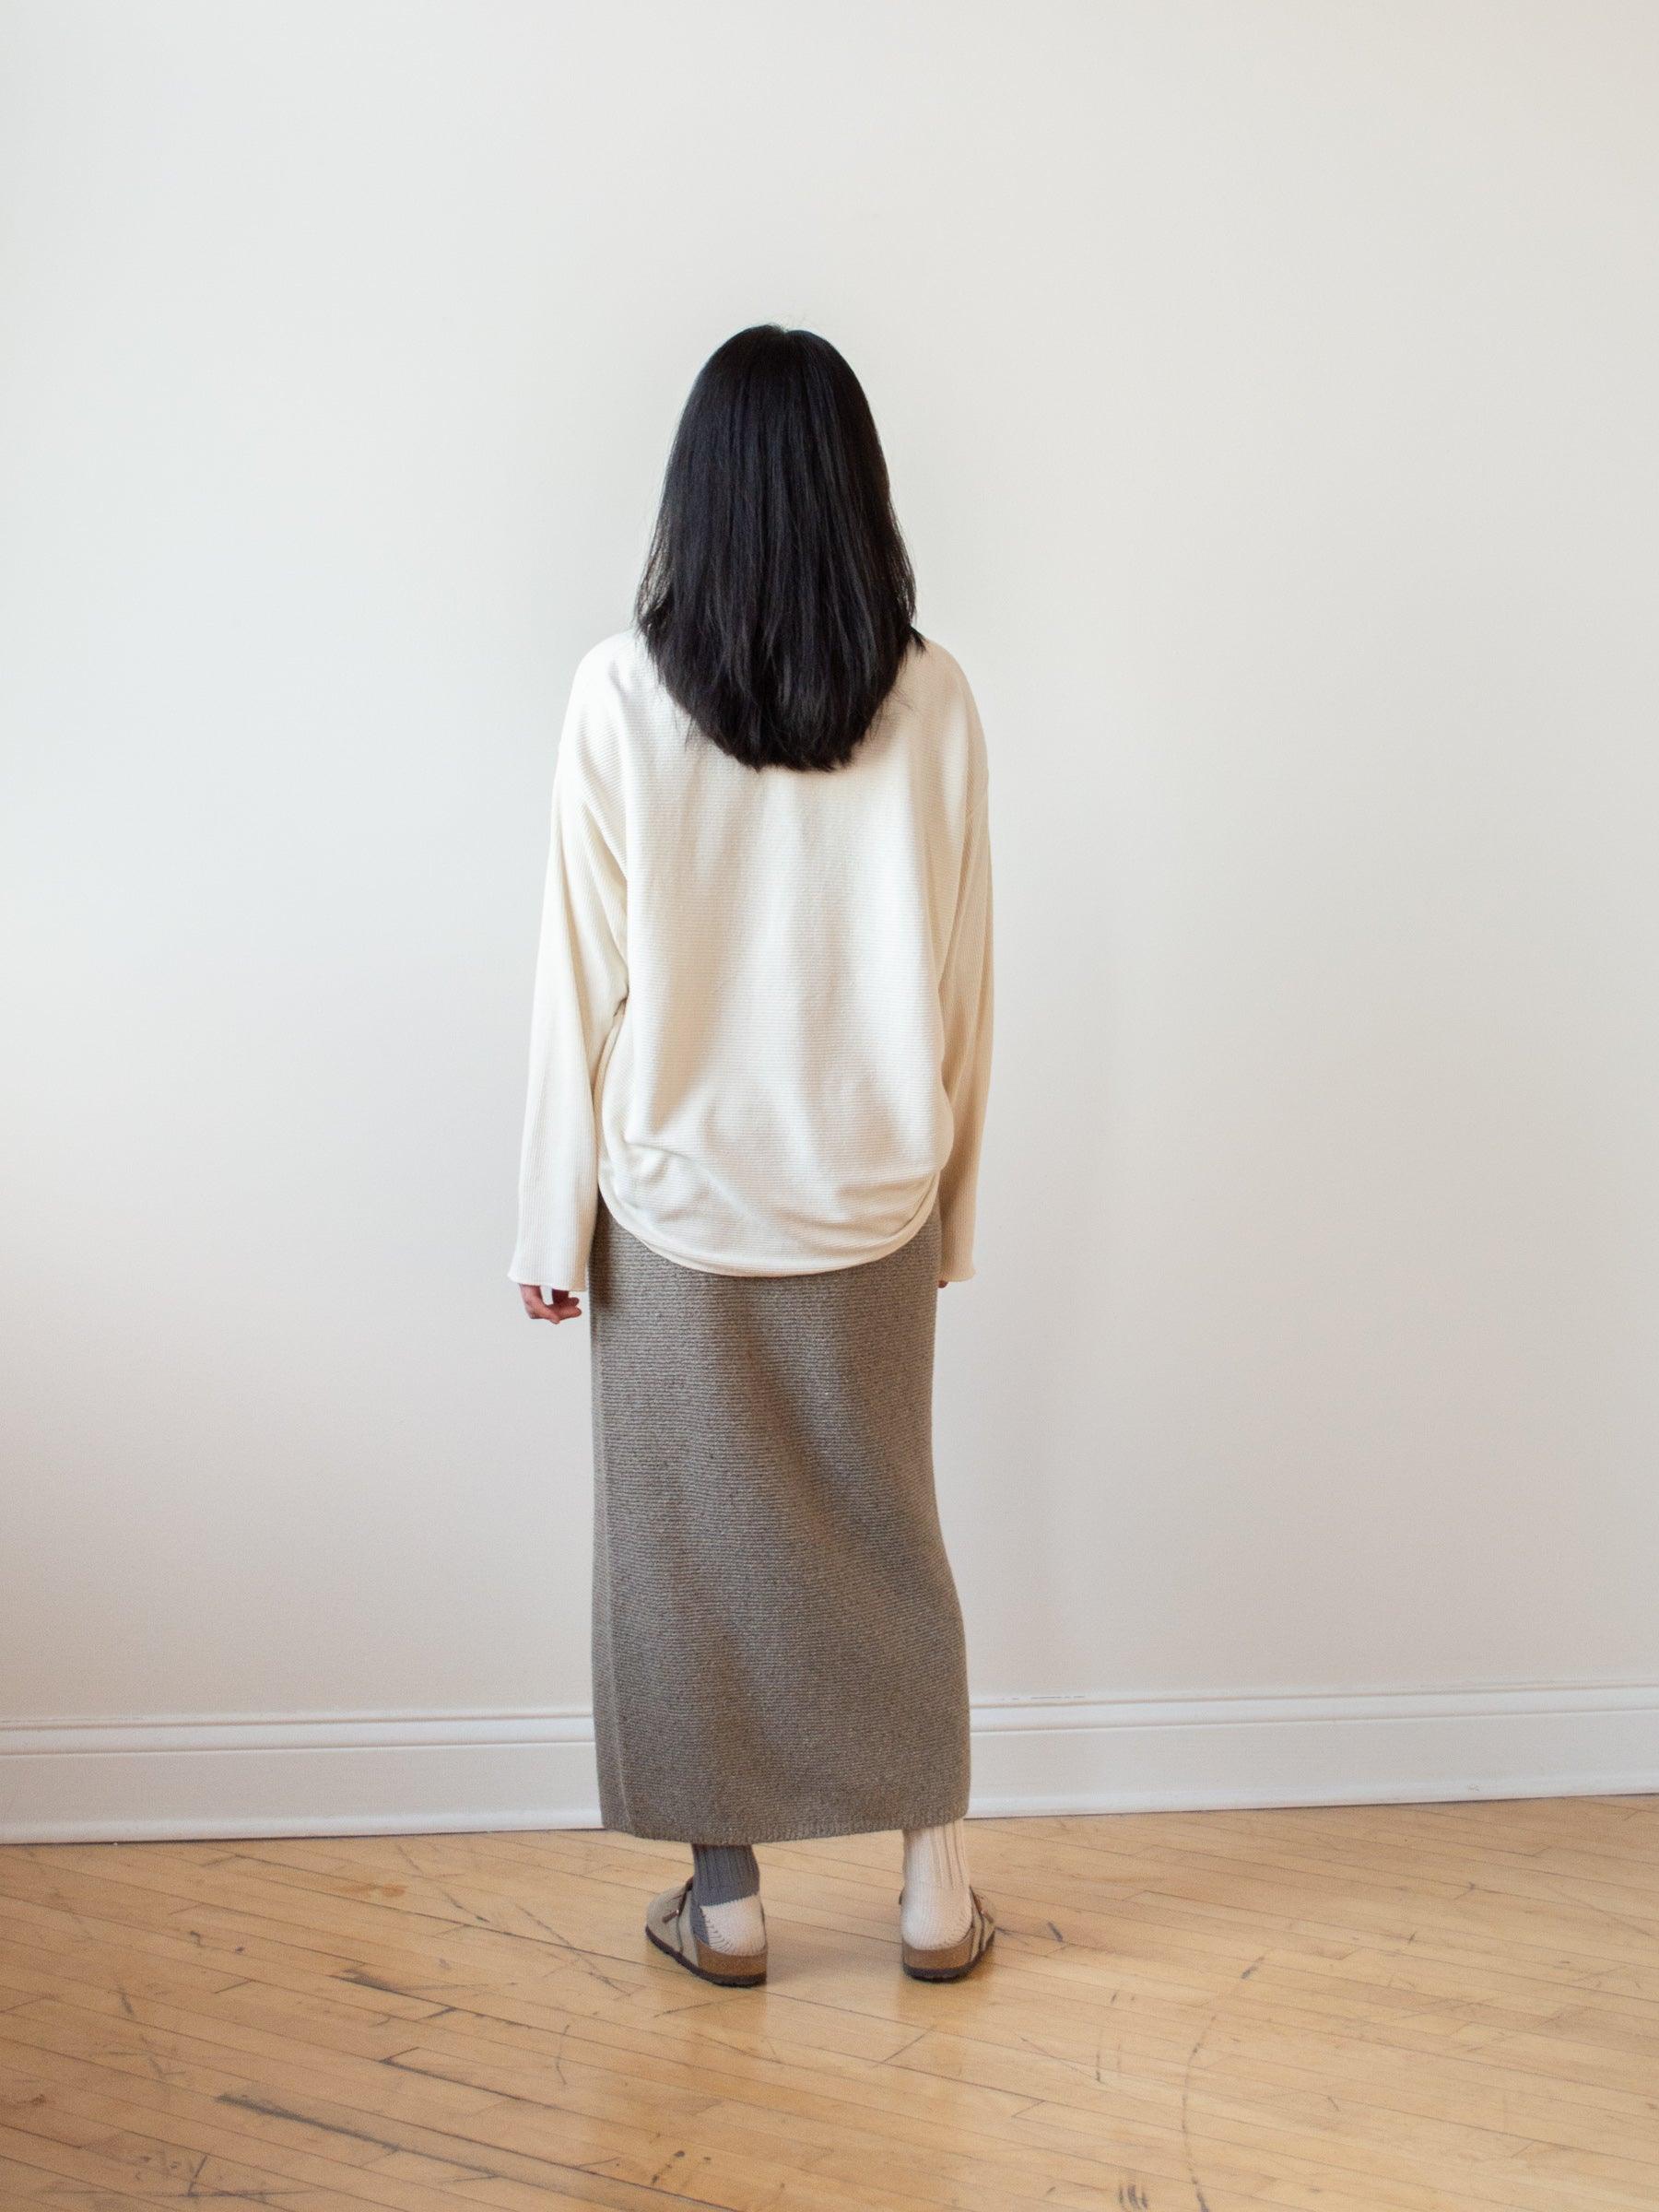 Namu Shop - Unfil Mulberry & Raw Silk Knit Skirt